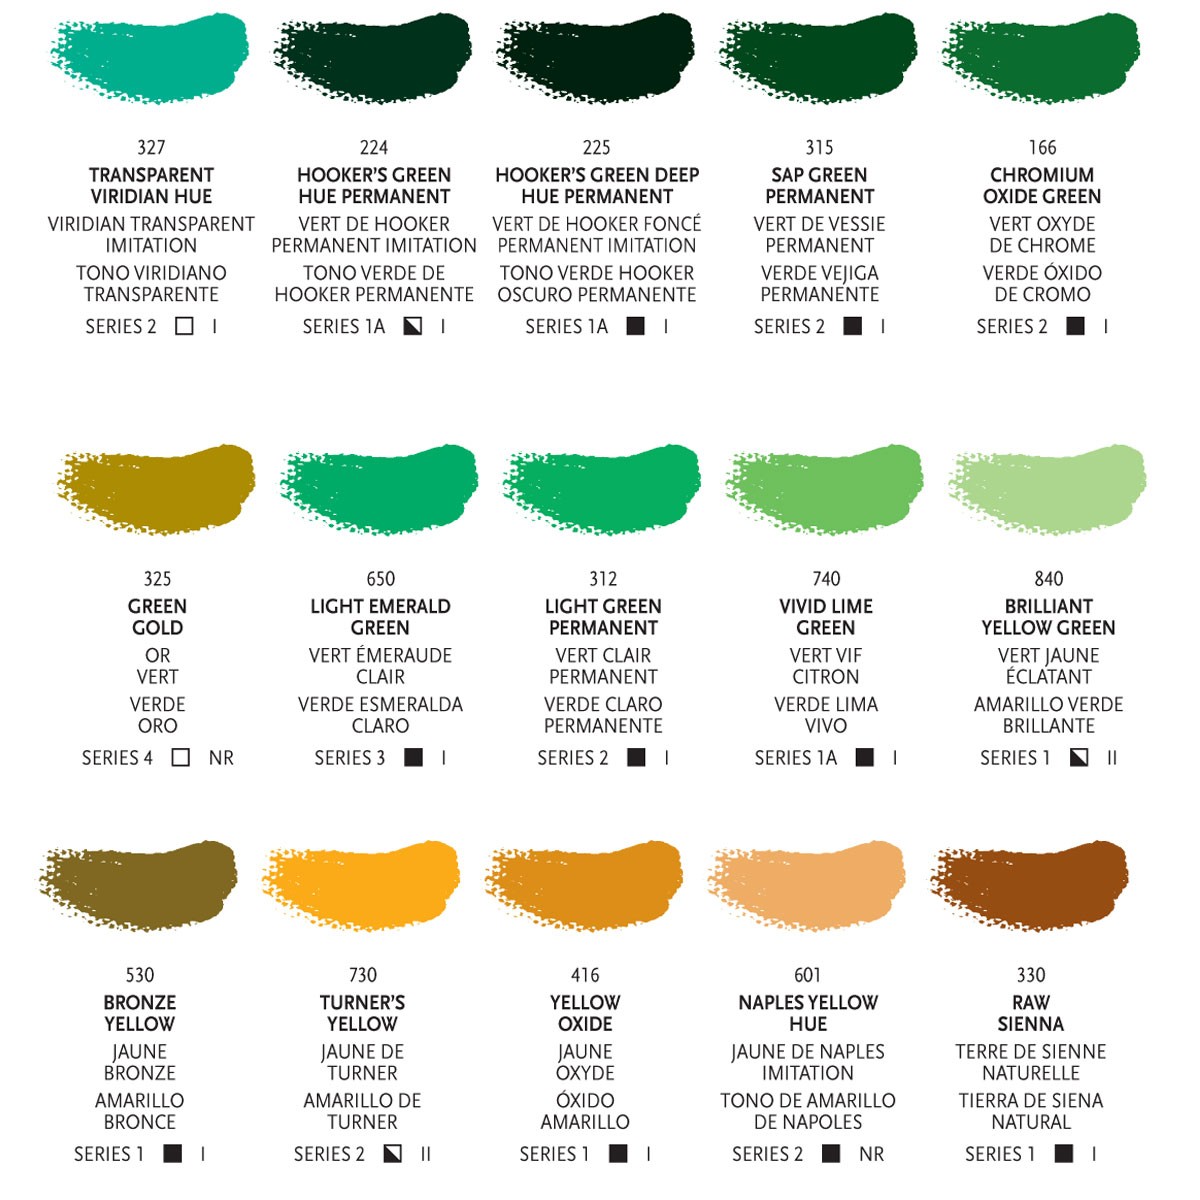 Liquitex Heavy Body Acrylic Paint Colour Chart